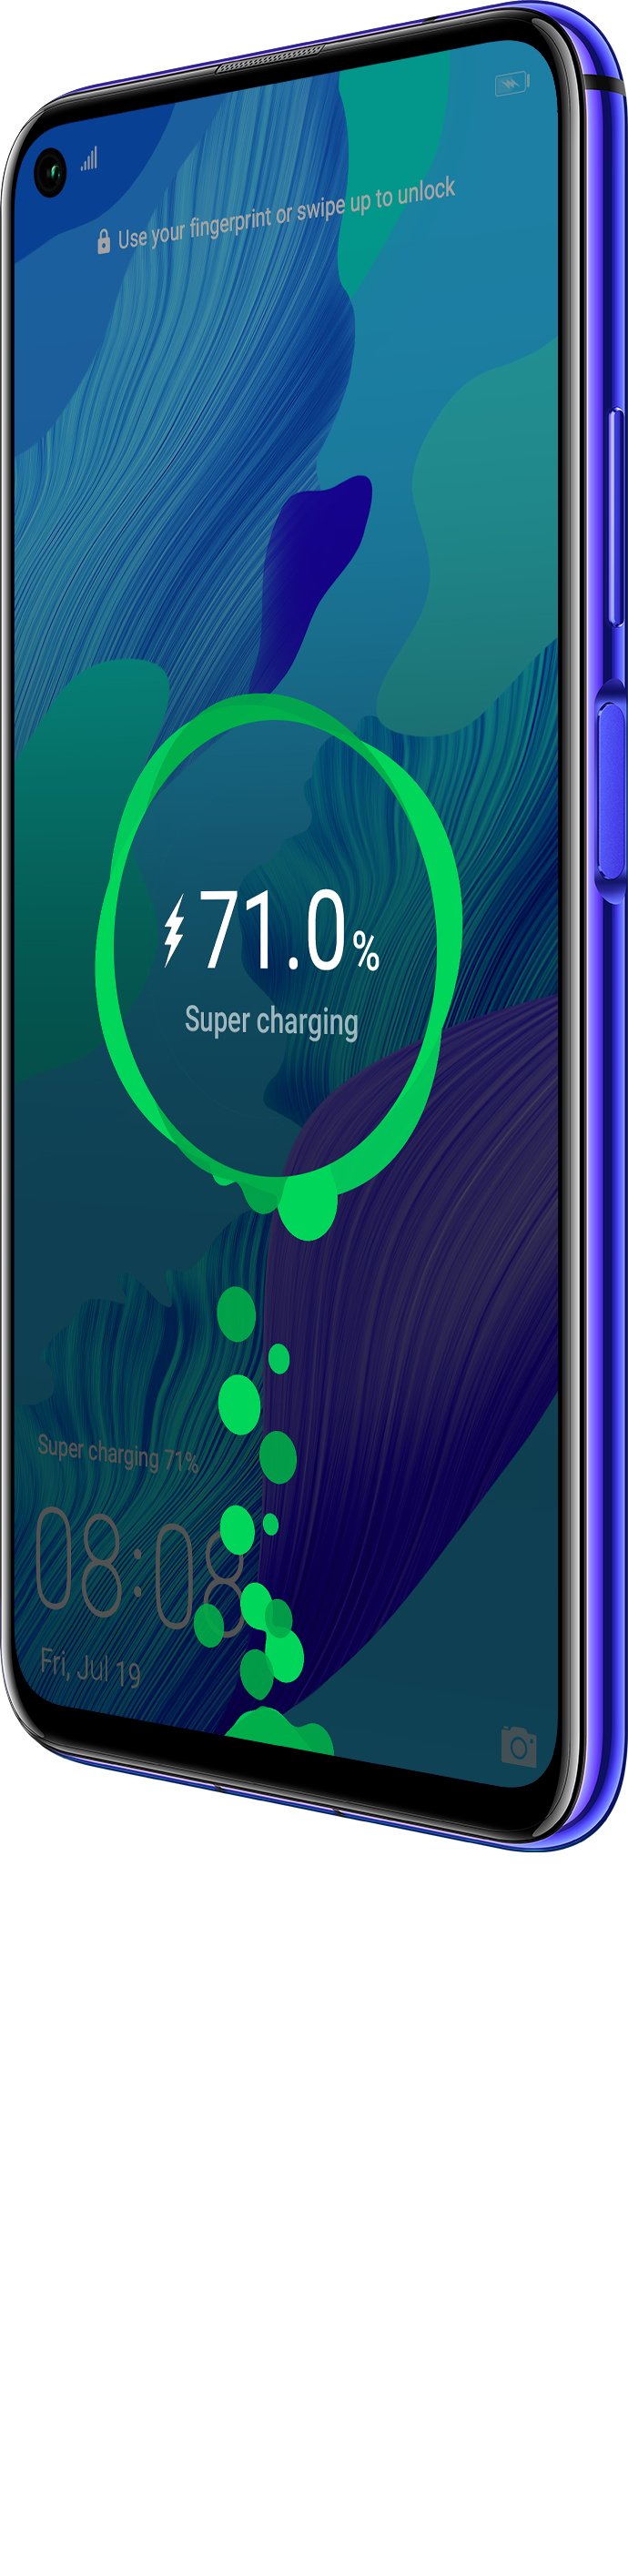 HUAWEI nova 5T super charging